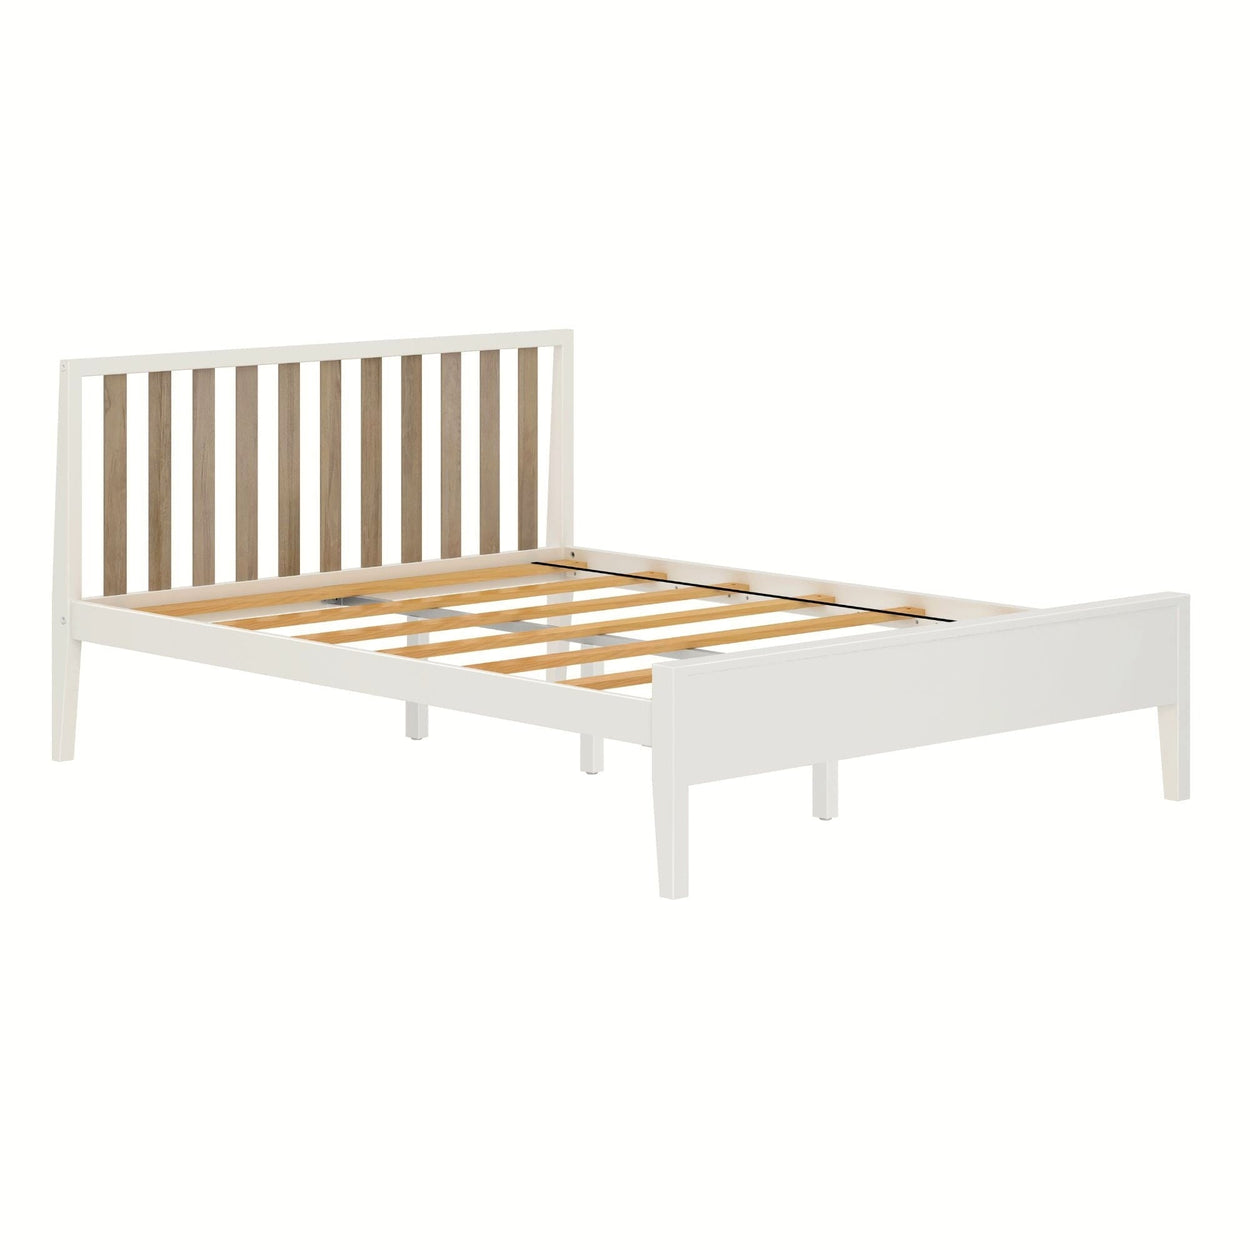 210312-202 : Kids Beds Scandinavian Queen-Size Bed with Slatted Headboard, White/Blonde